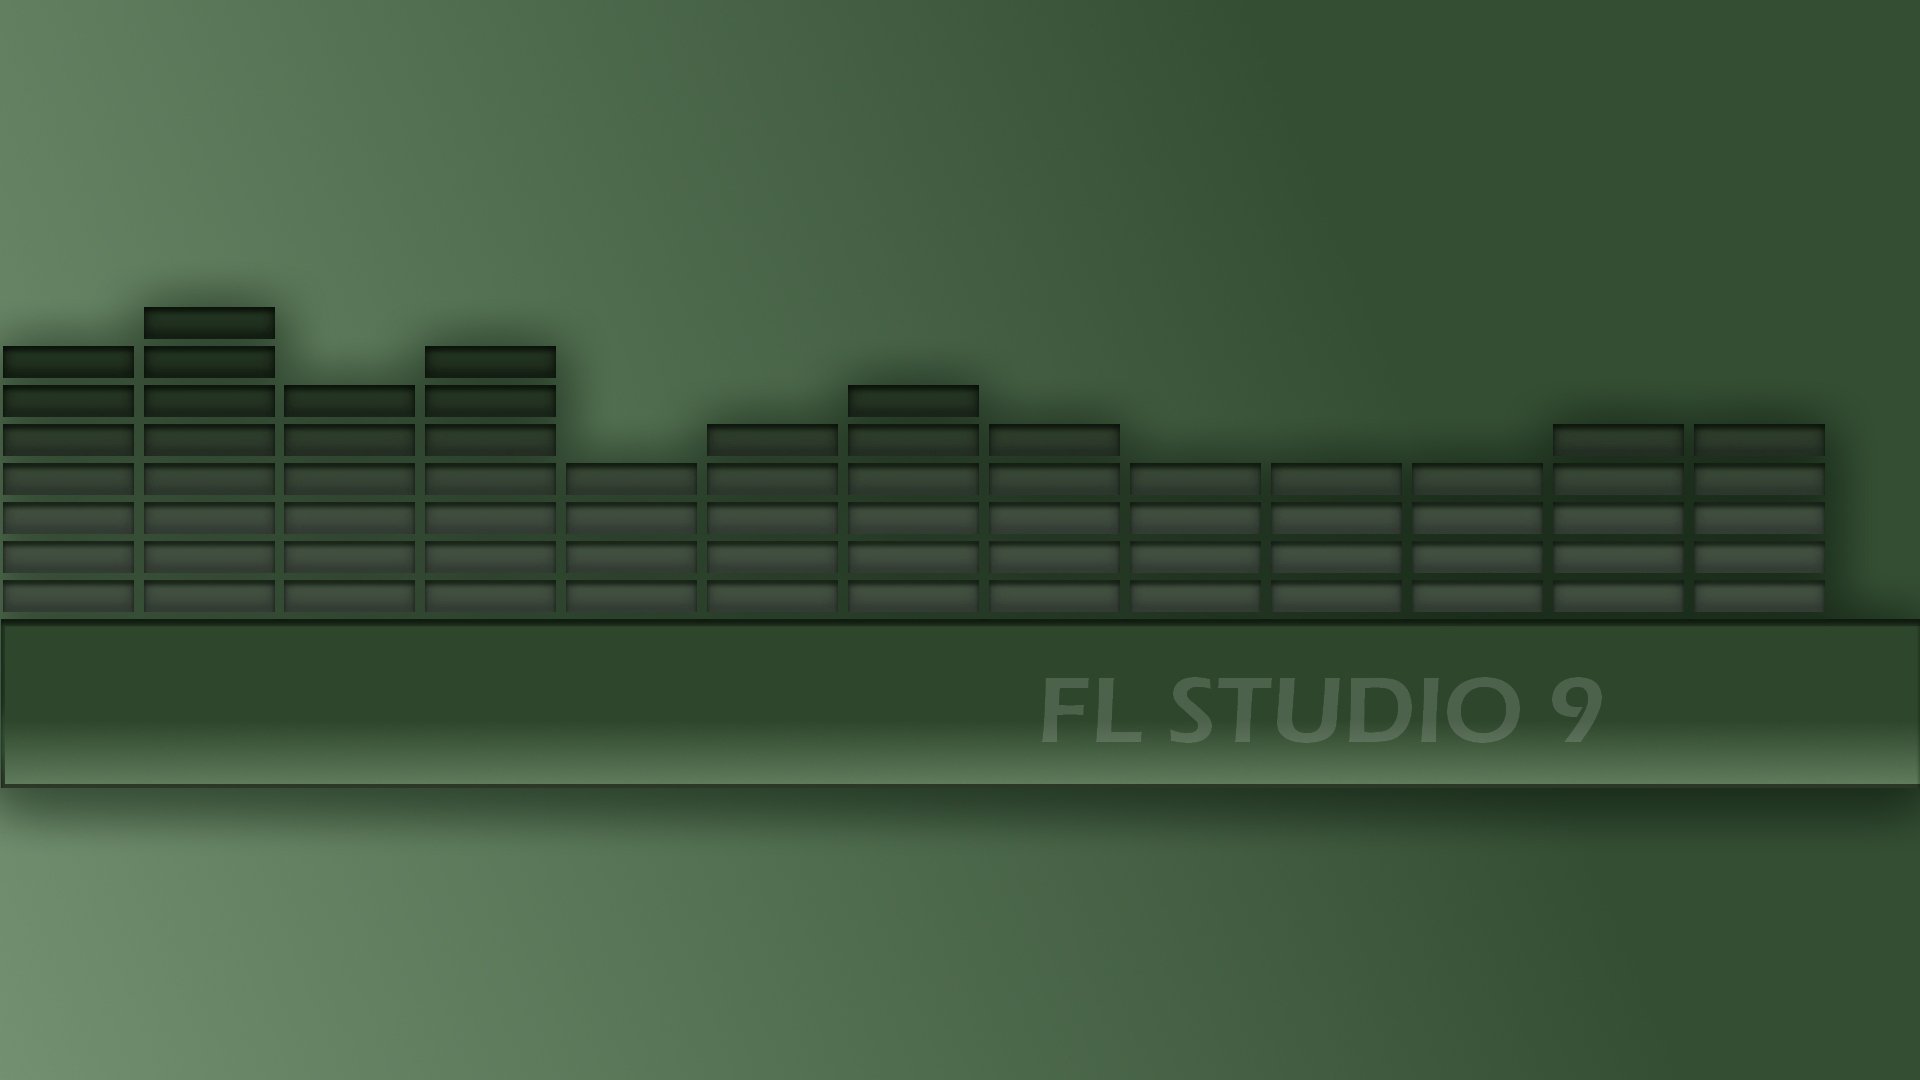 FL Studio Greenie Background by D jancho E on